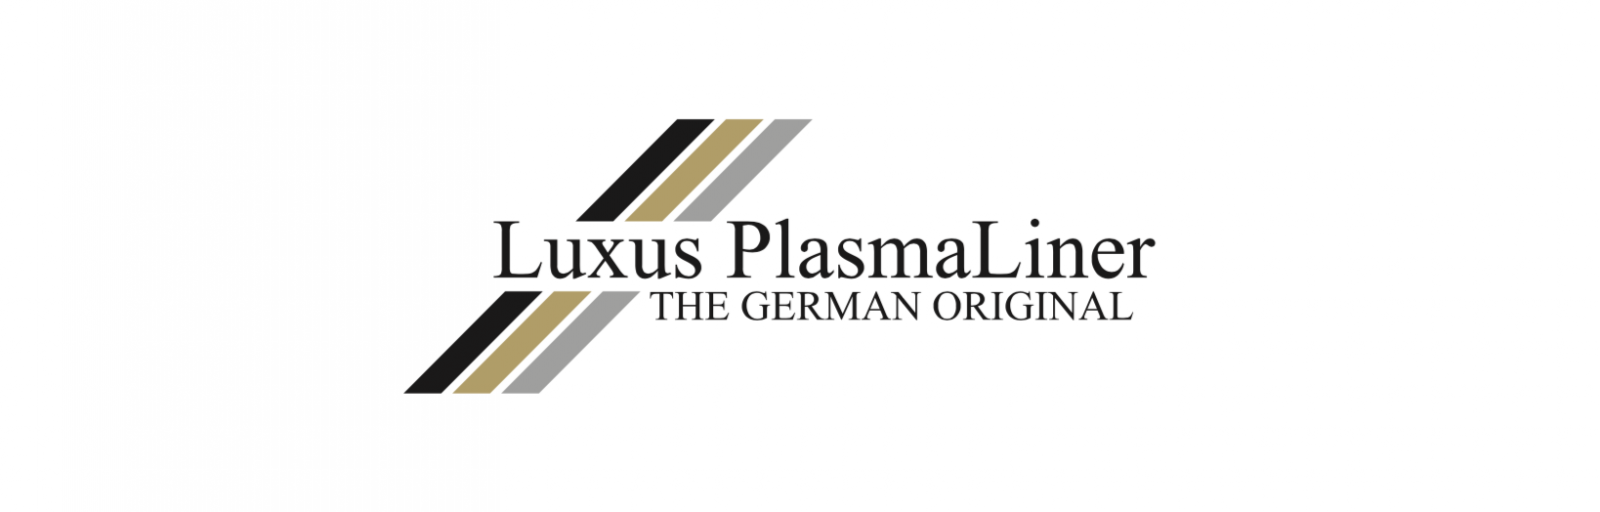 Luxus Plasmaliner